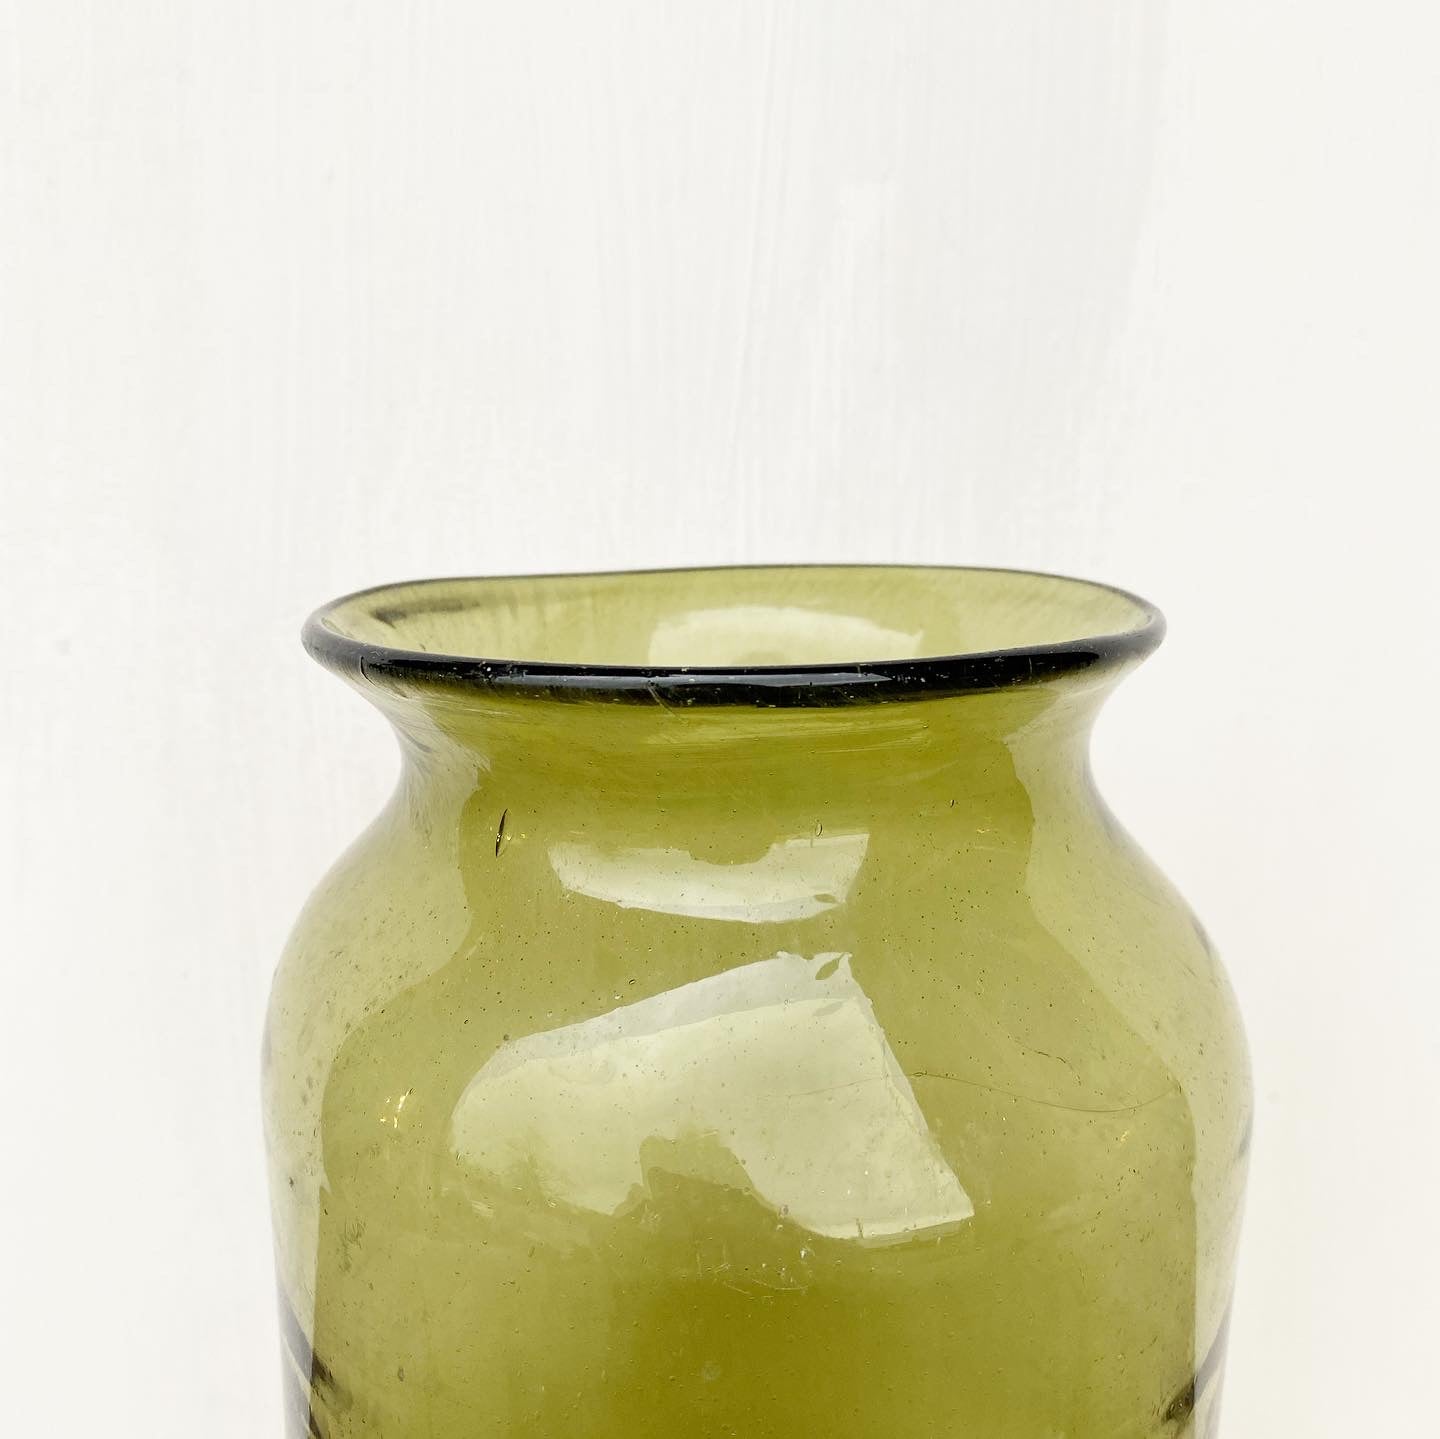 Grand contenant en verre bullé vert